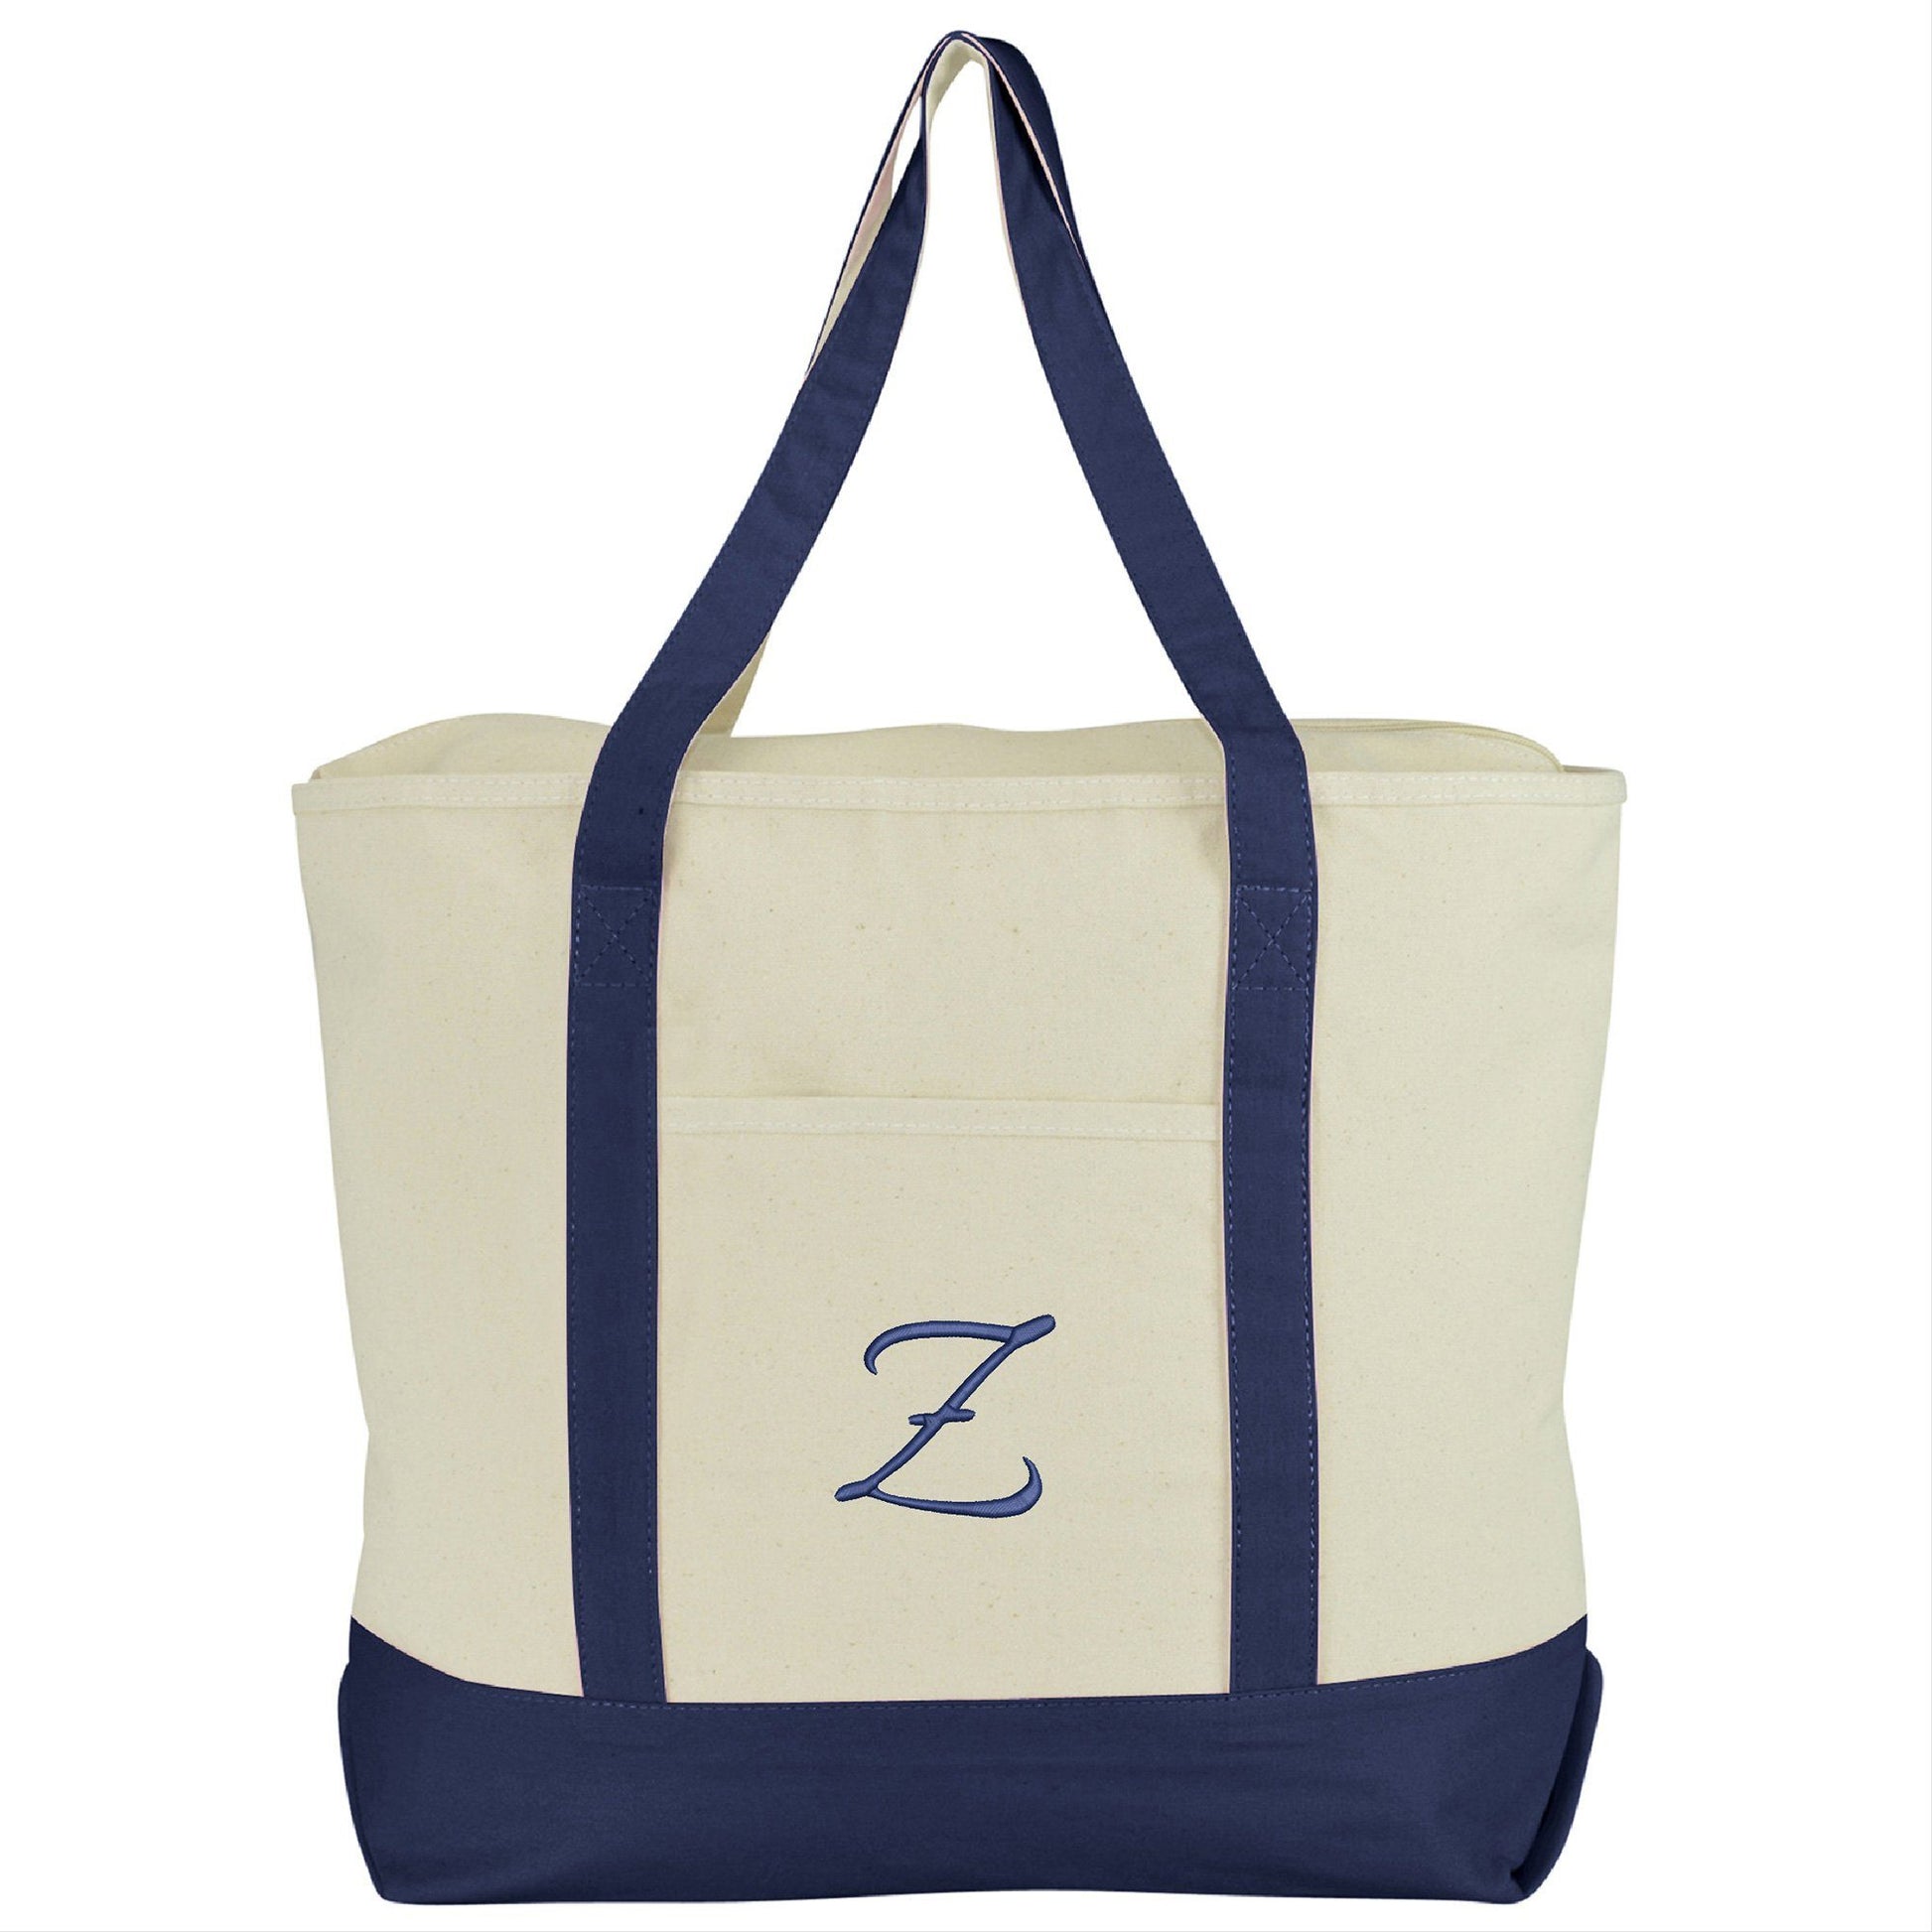 DALIX Personalized Tote Bag Monogram Navy Blue A-Z Bags DALIX Z Navy Blue 